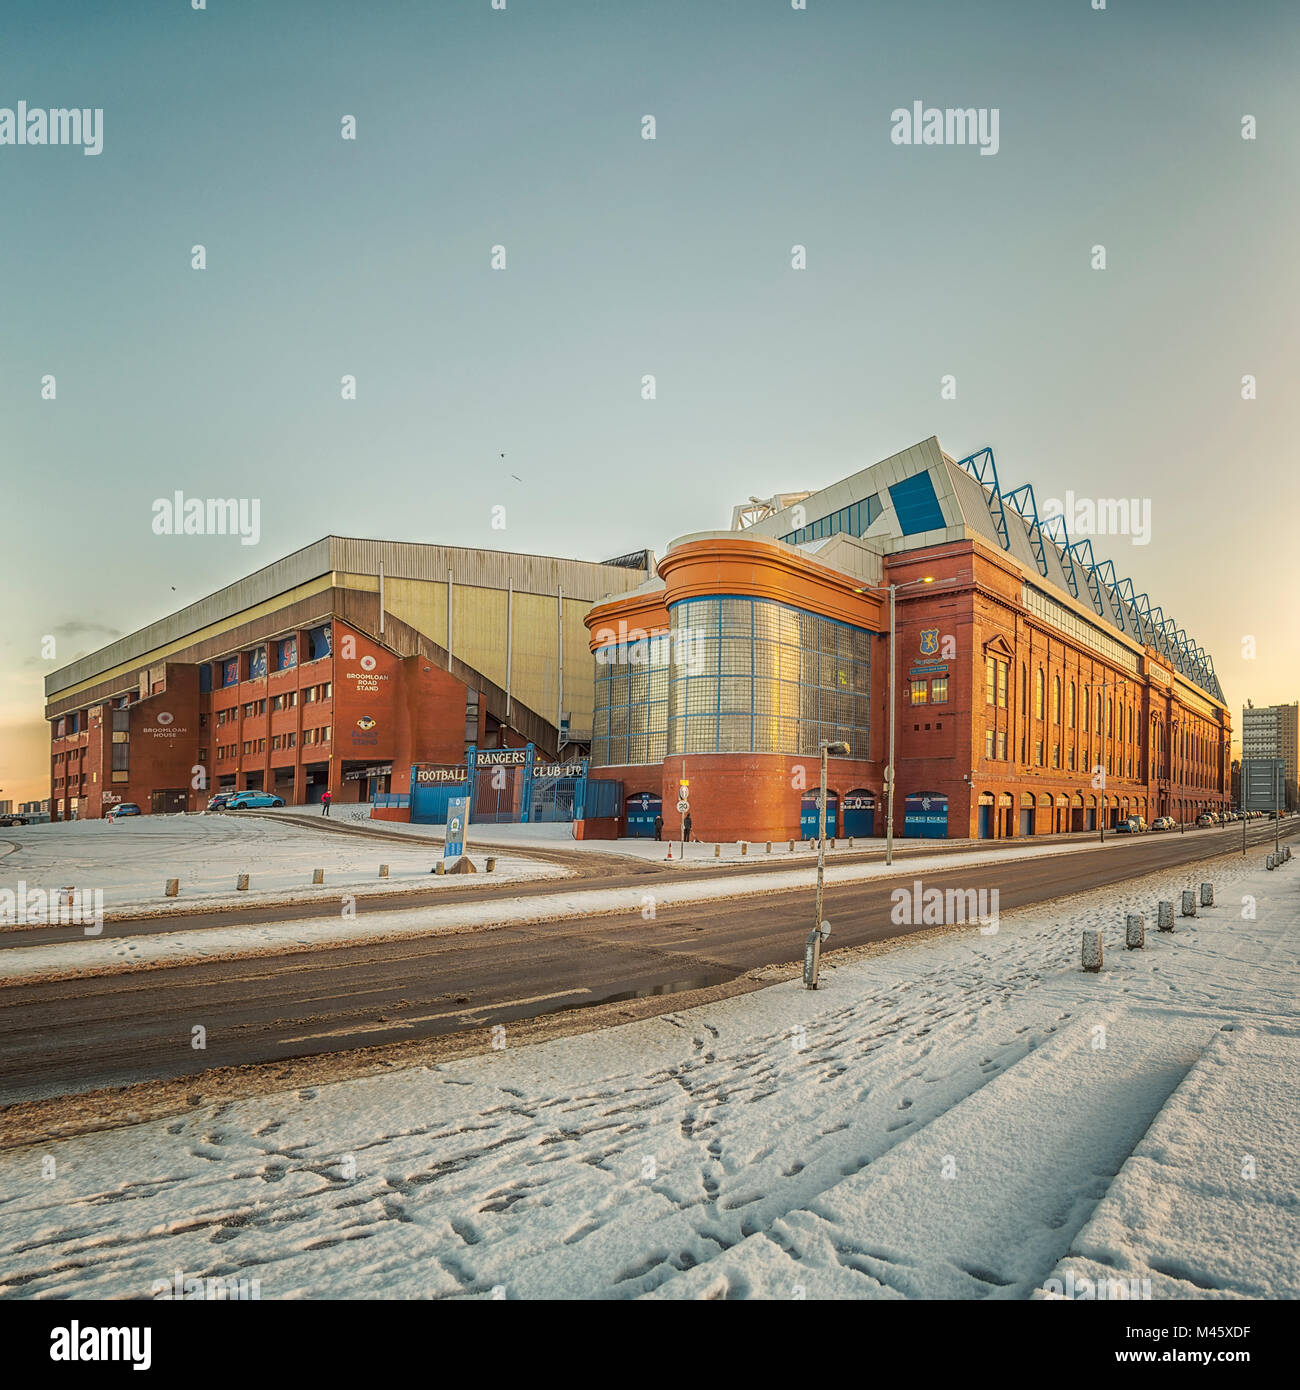 GLASGOW, SCOZIA - Gennaio 17, 2018: una vista del famoso Ibrox Stadium che ospita i Rangers Football Club. Foto Stock